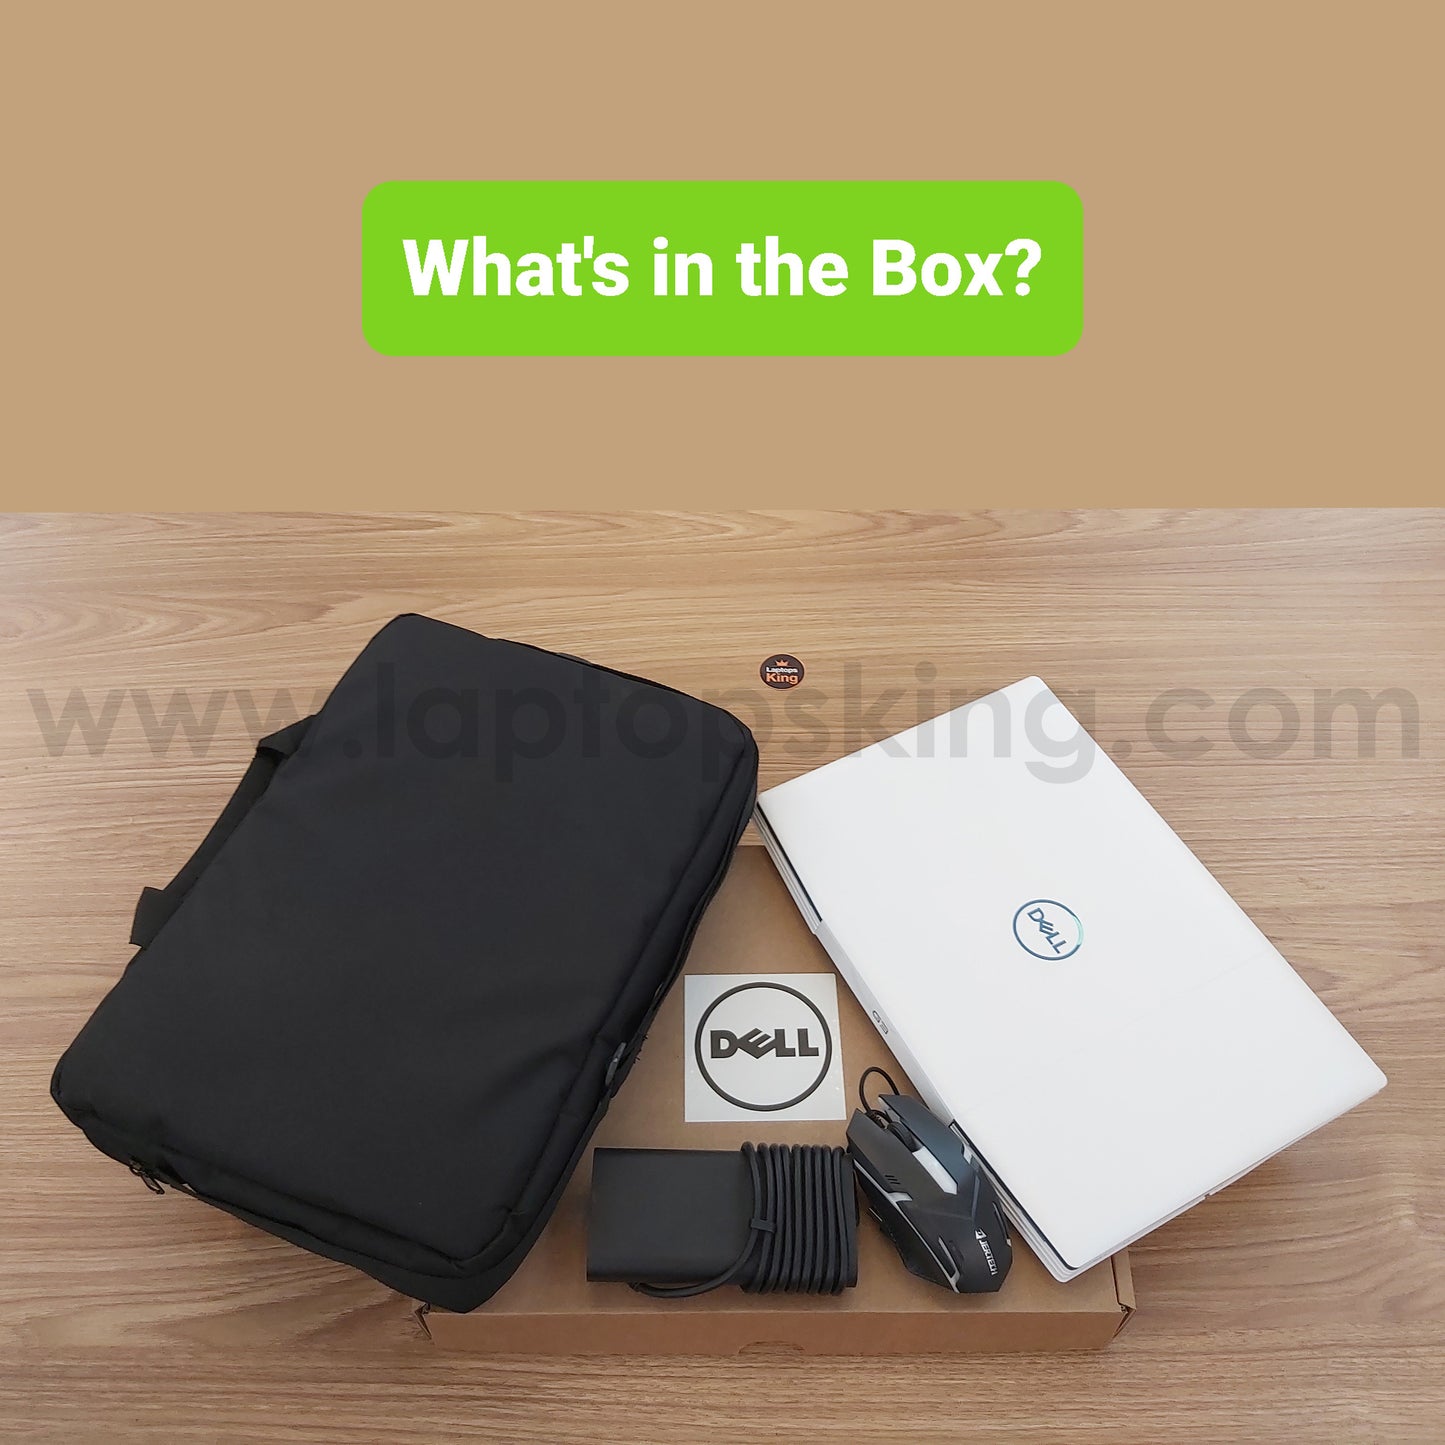 Dell G3 3500 White i5-10300h GTX 1660ti 120Hz Gaming Laptop (New Open Box)